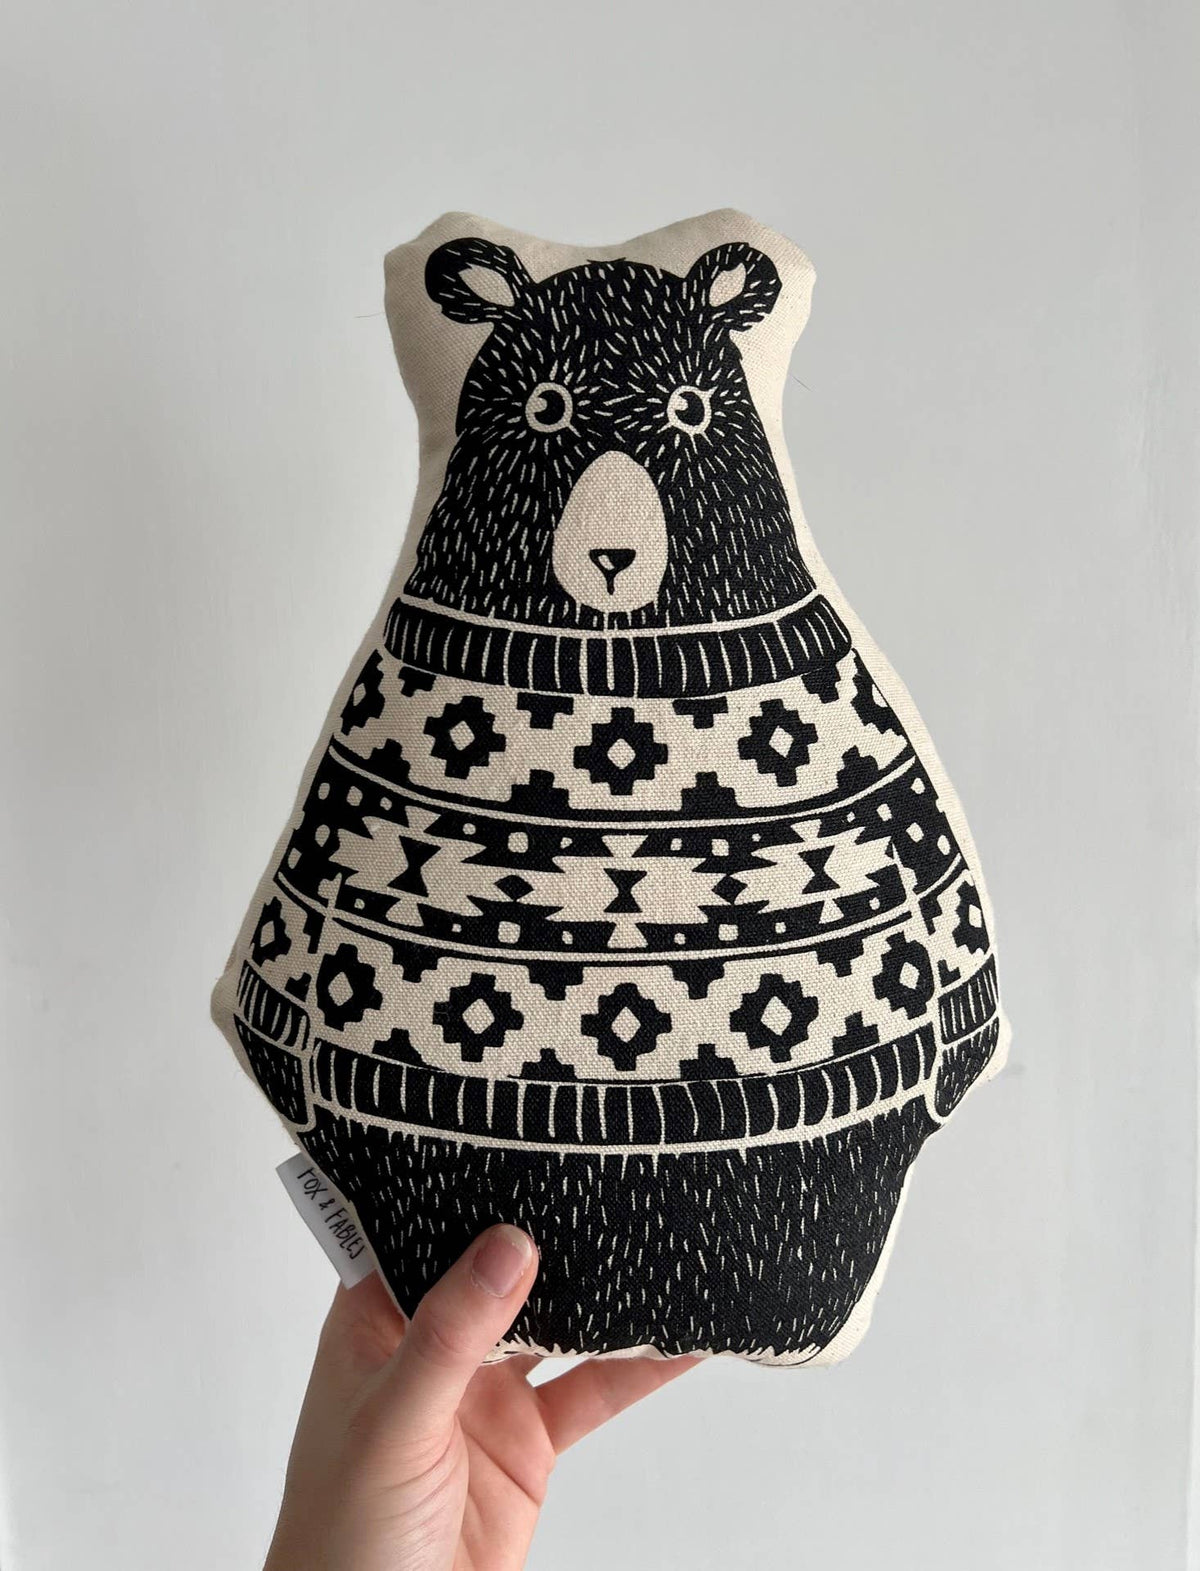 Printed Pillows - Woodland Animals: Bear